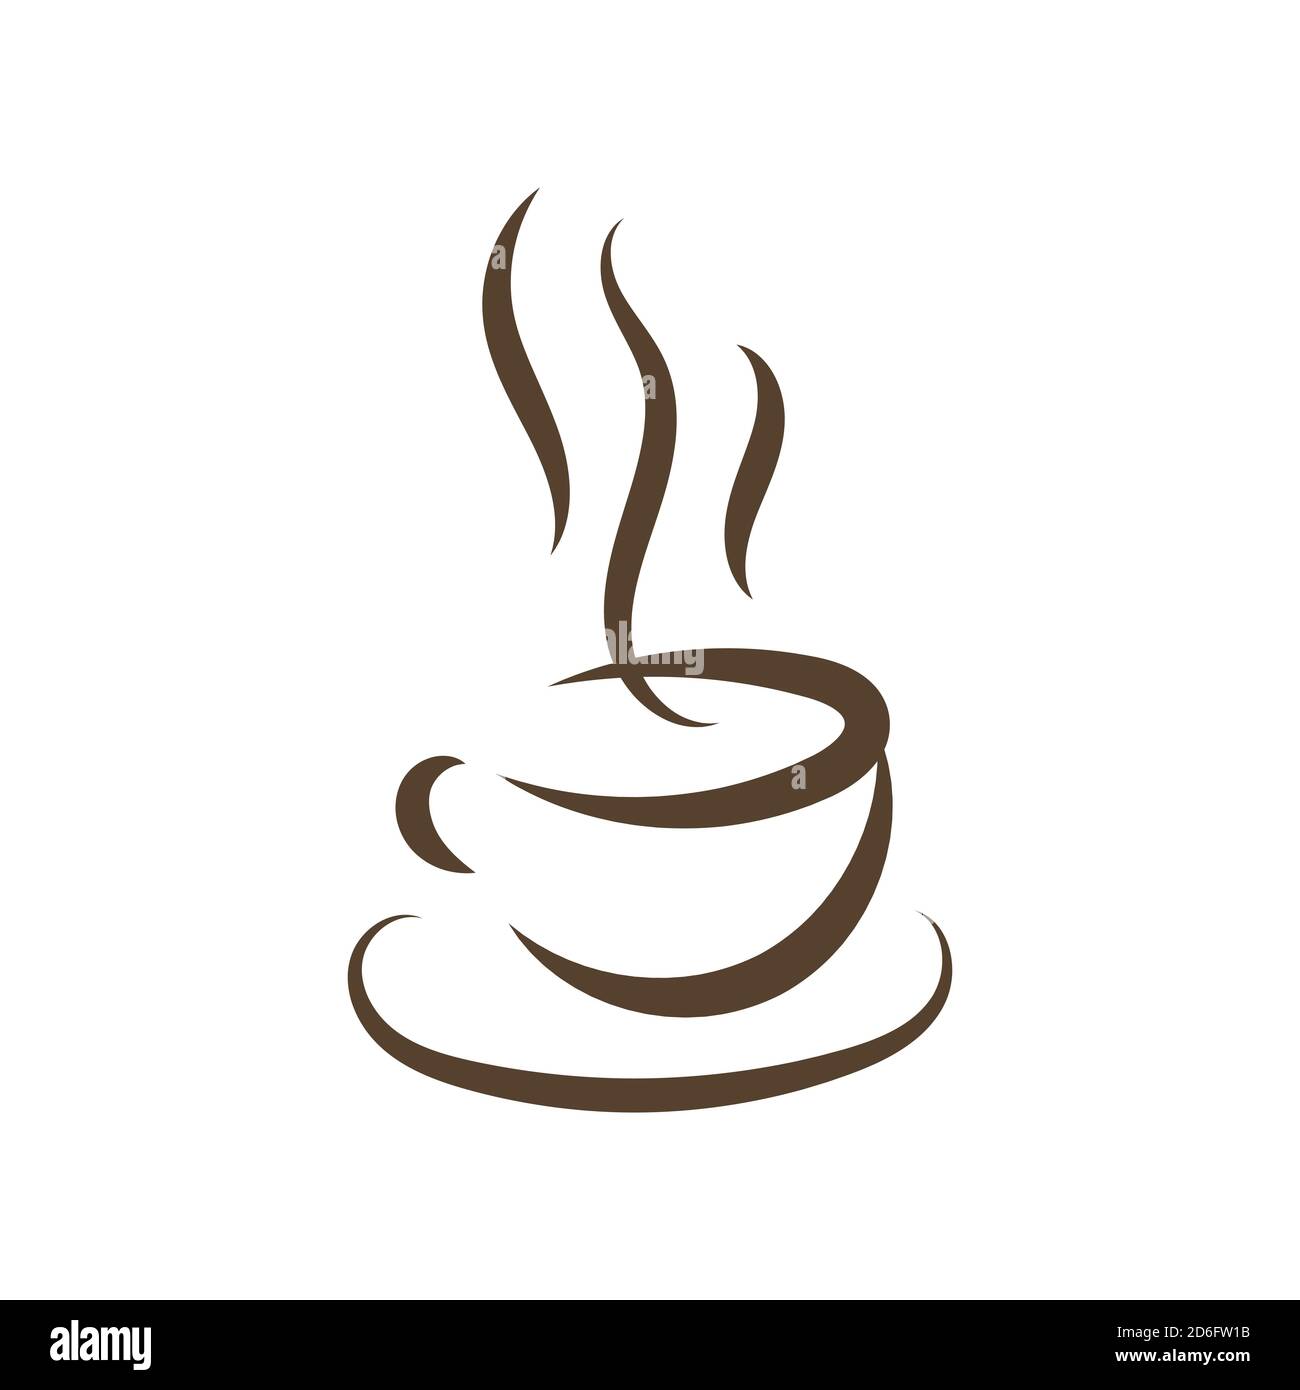 https://c8.alamy.com/comp/2D6FW1B/a-cup-of-coffee-logo-design-vector-illustrations-2D6FW1B.jpg